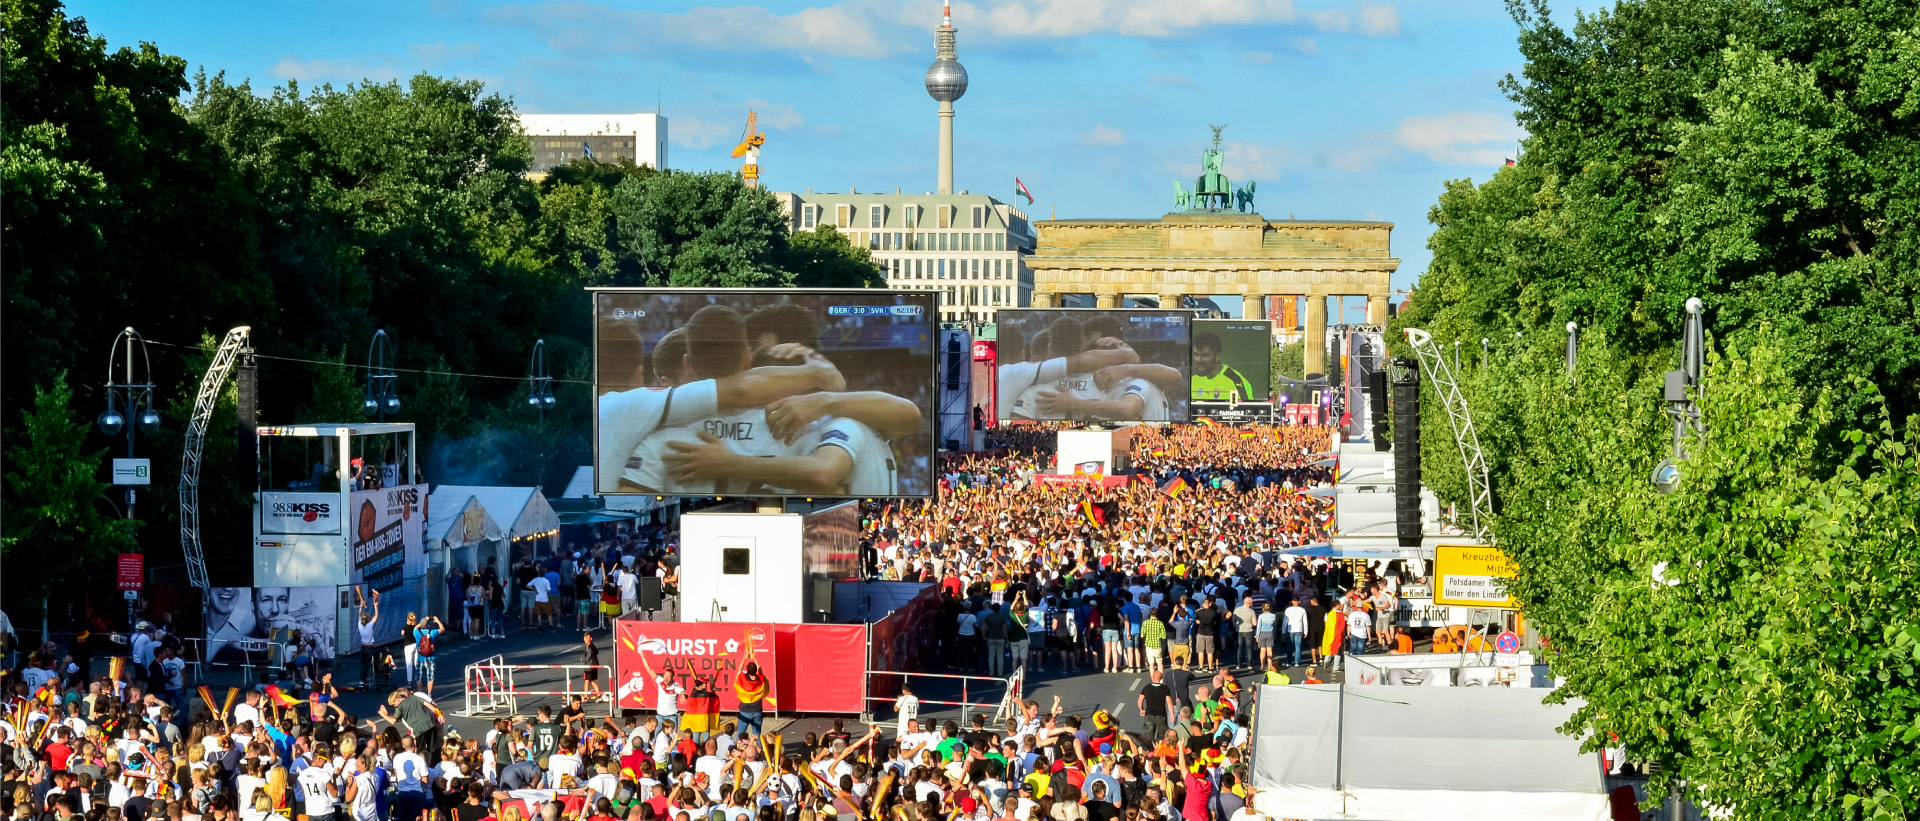 LED Truck/Trailer Euro 2016 Fanzone Berlin